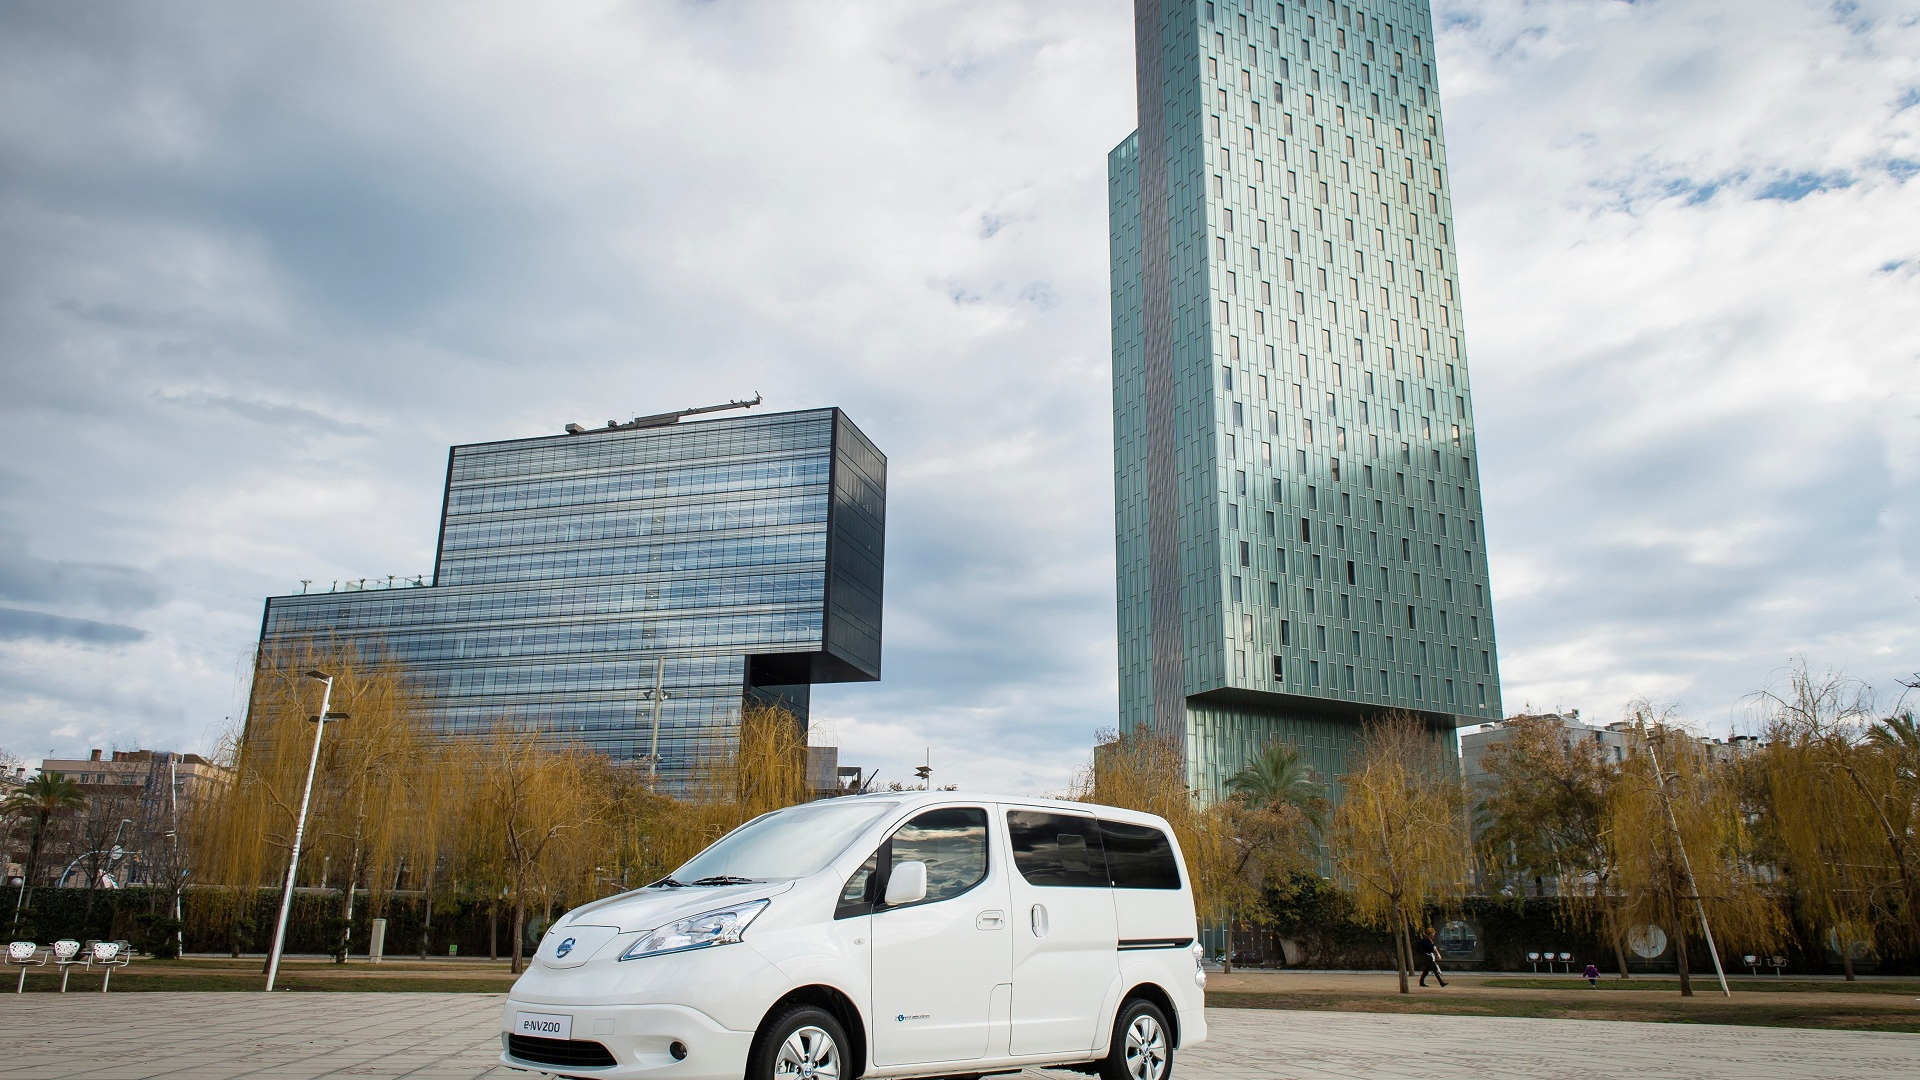 2018 Nissan e-NV200 electric delivery van (European version)